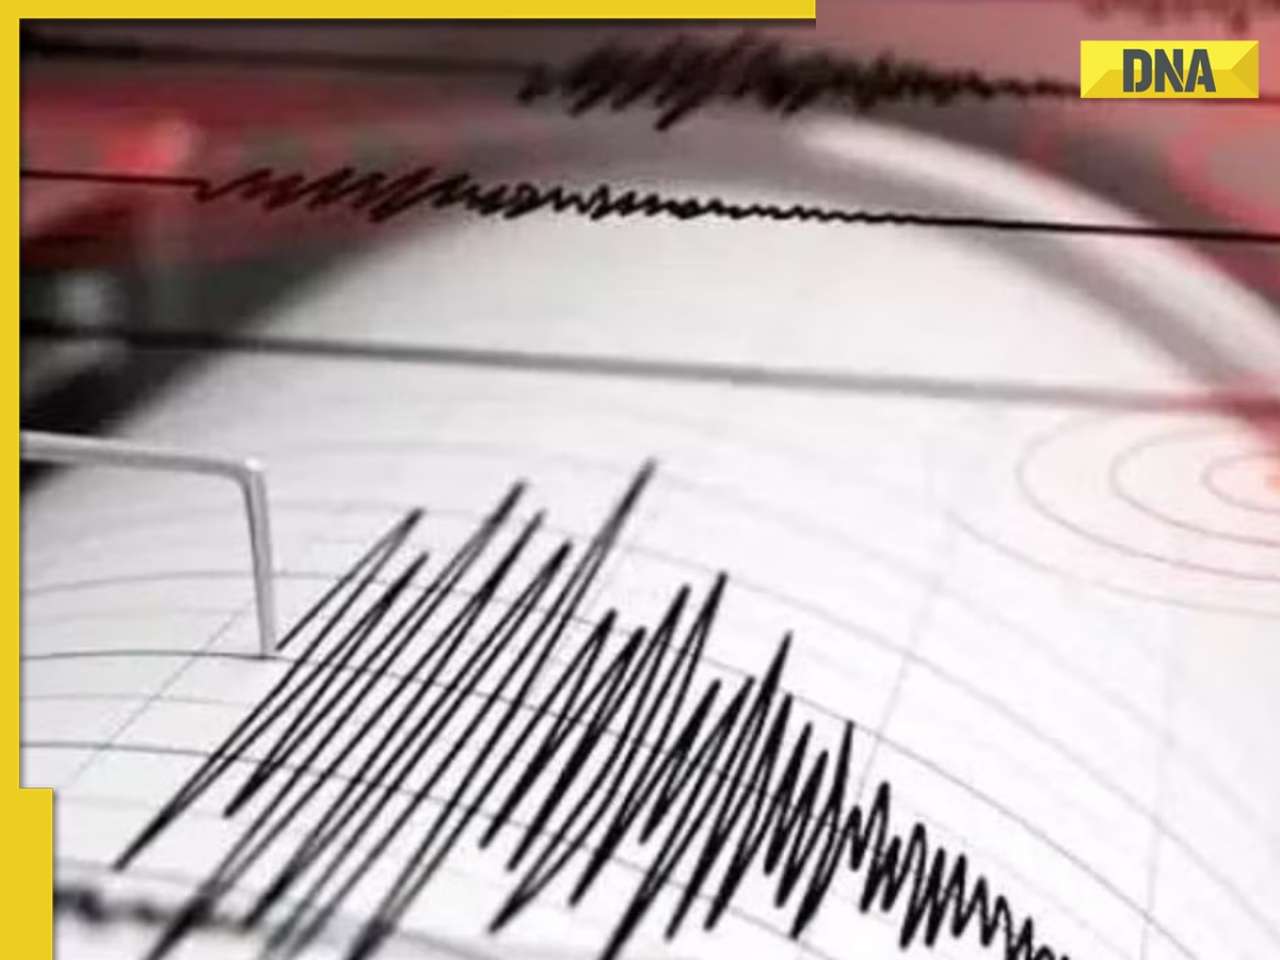 Earthquake of 4.8 magnitude shakes New York City area